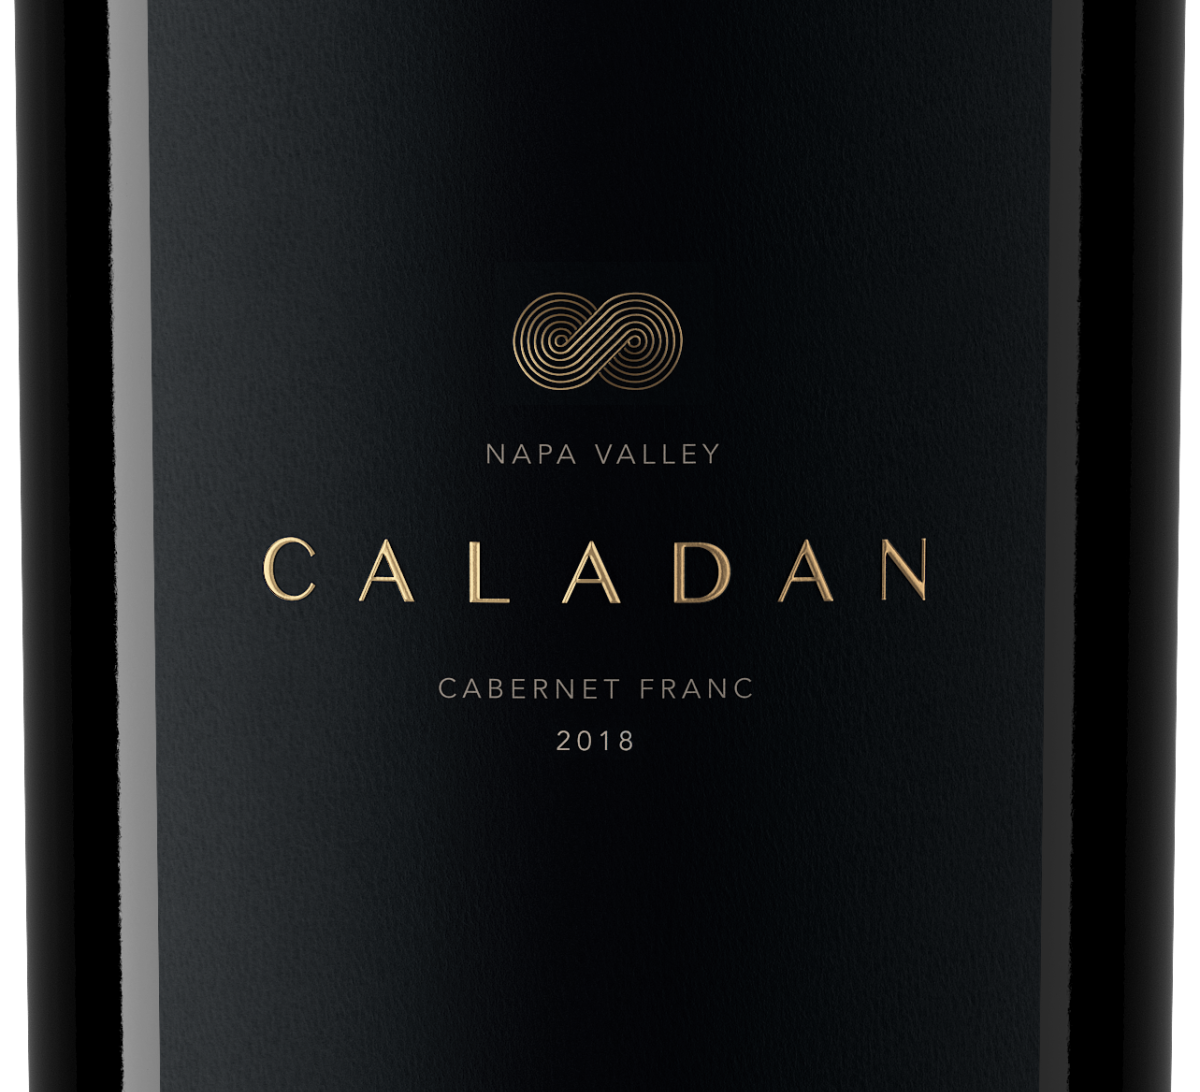 2018 Caladan Cabernet Franc wine bottle